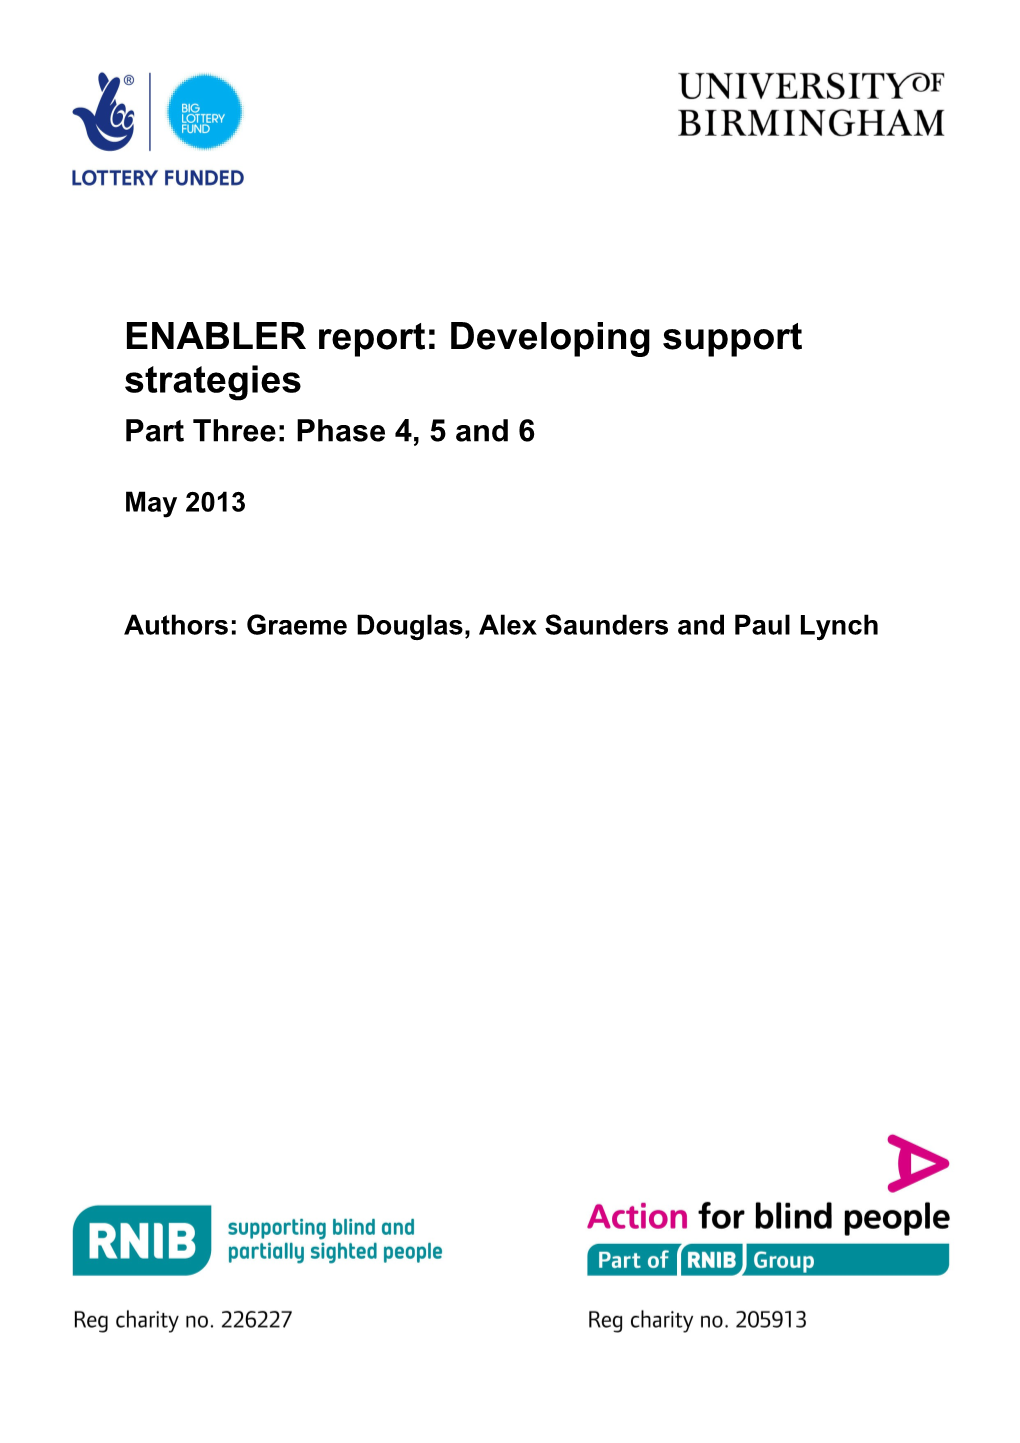 ENABLER Report: Developing Support Strategies